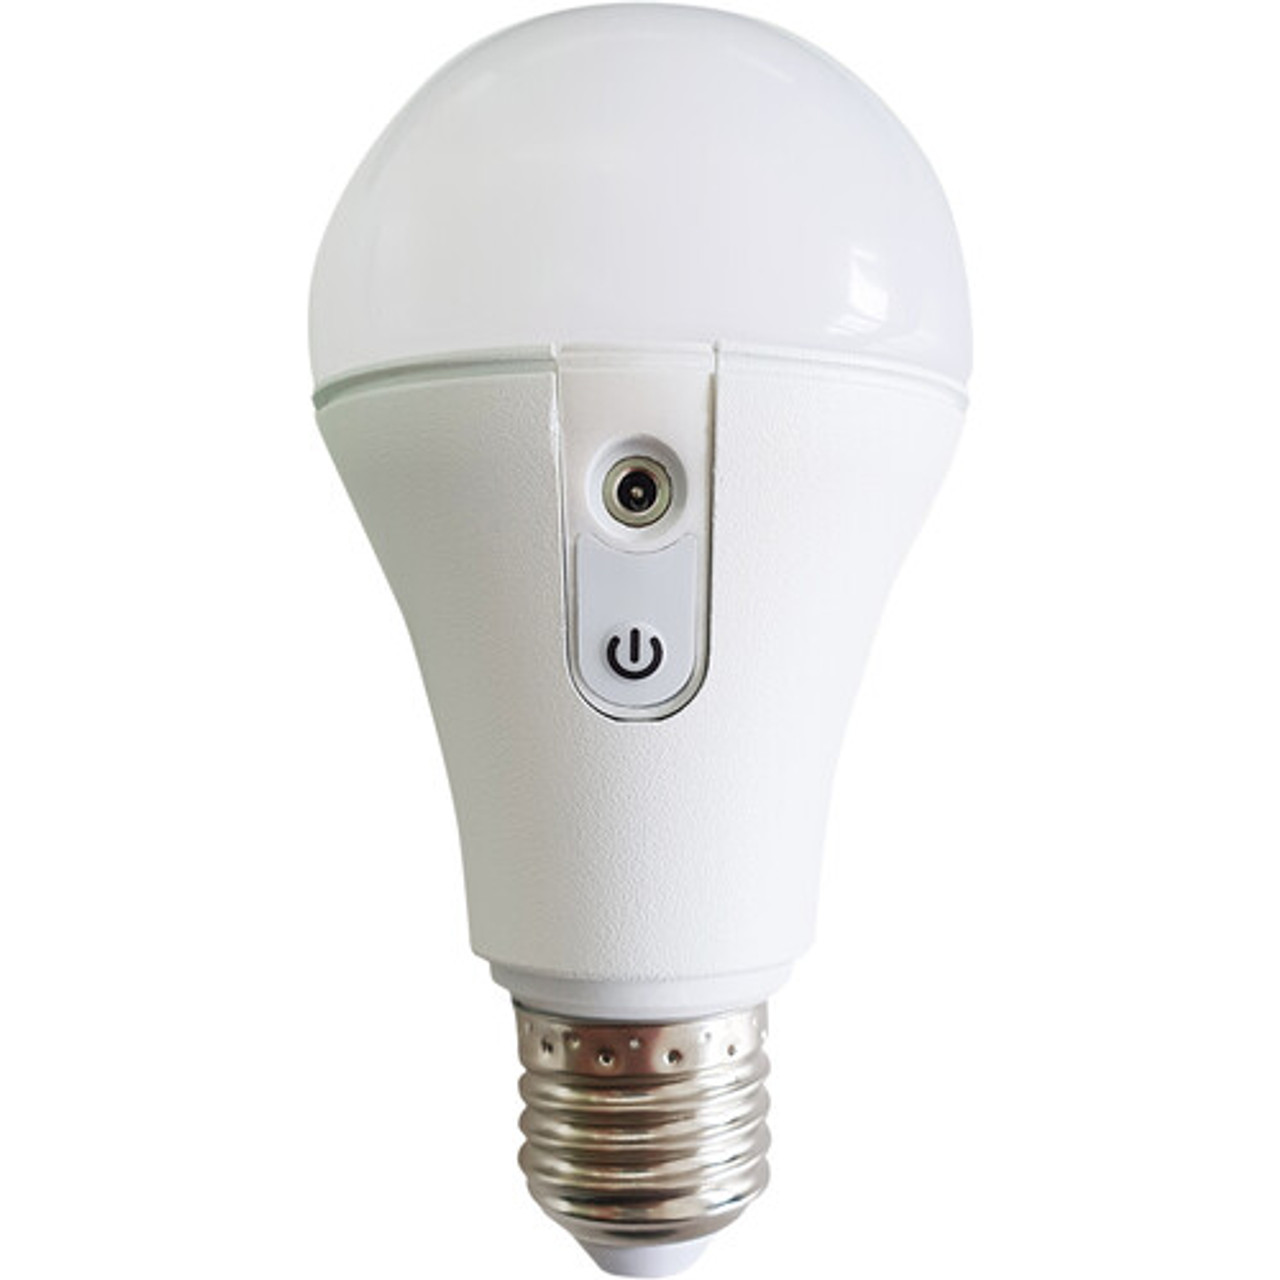 Astera FP5-Set NYX LED Bulbs with PowerStation, Case, and Accessories (Set of 8) (FP5-SET NYX BULB E26-US *SET*)